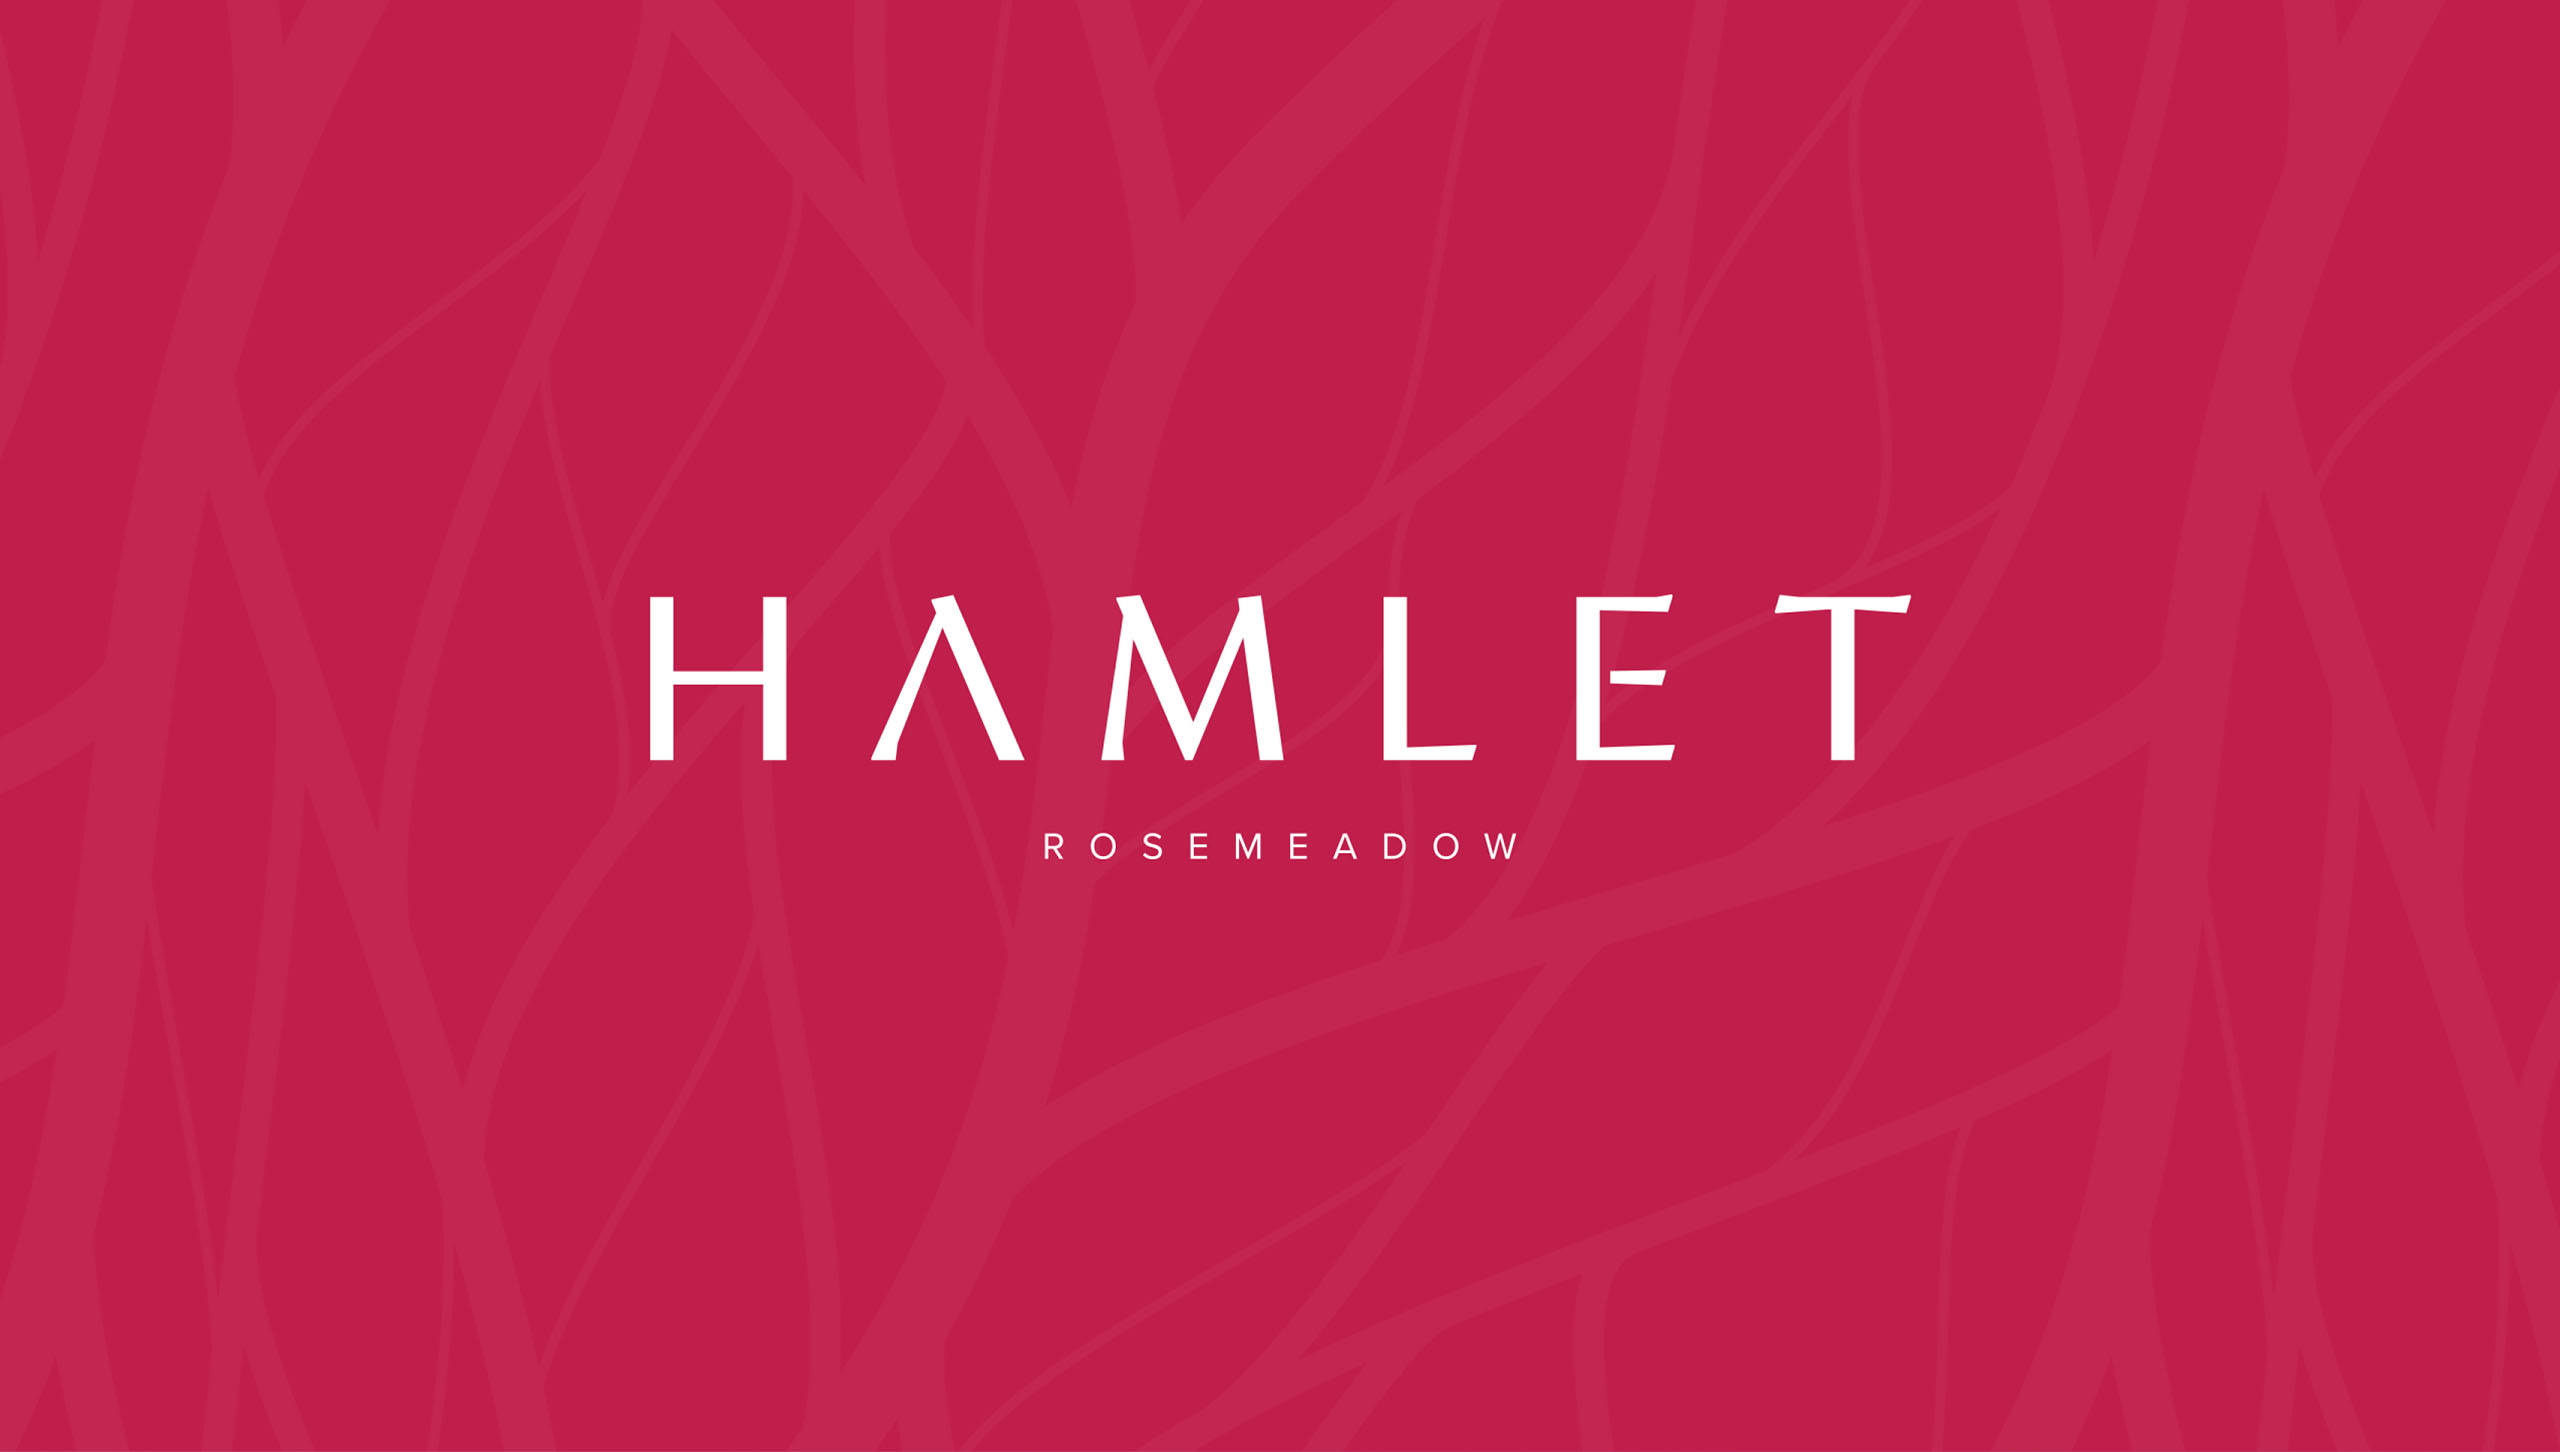 Hamlet Digital Design and Digital Strategy